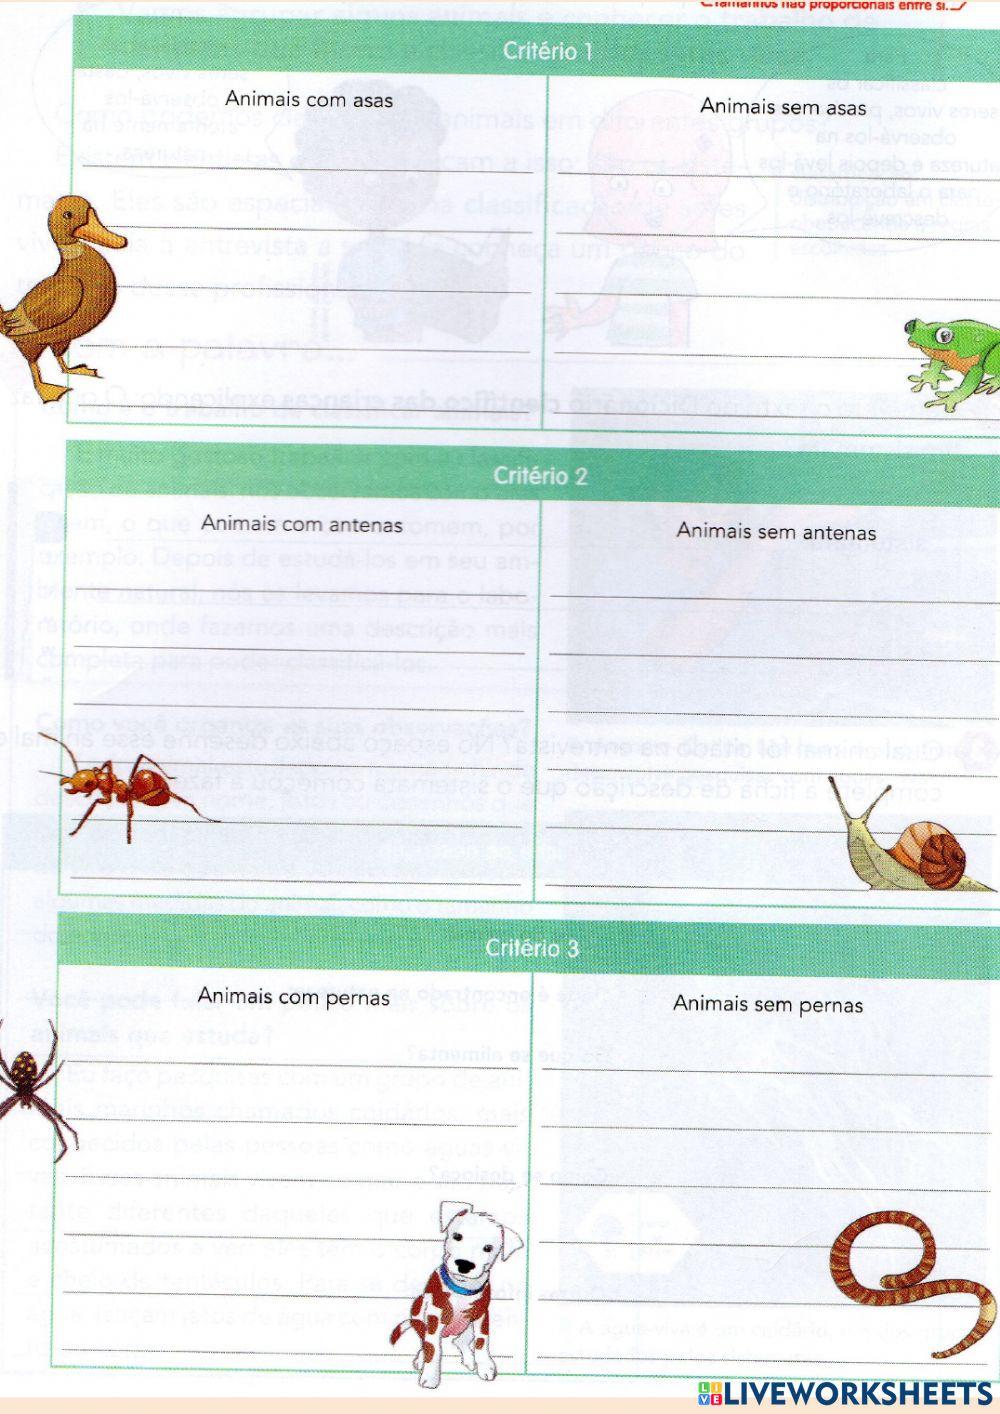 Classificando animais